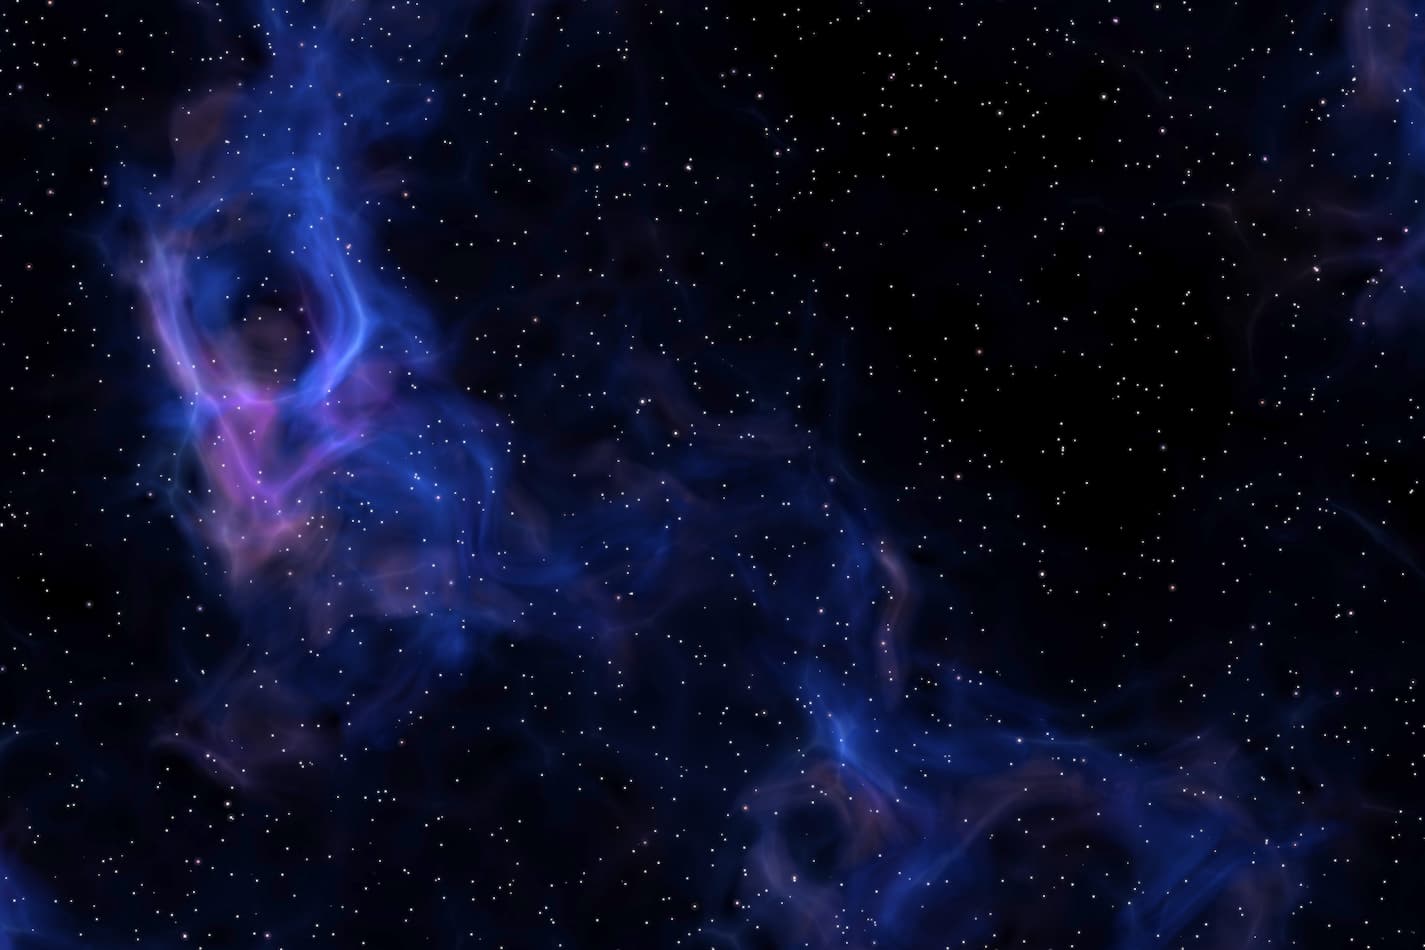 stars in the deep space 2021 08 26 15 27 23 utc